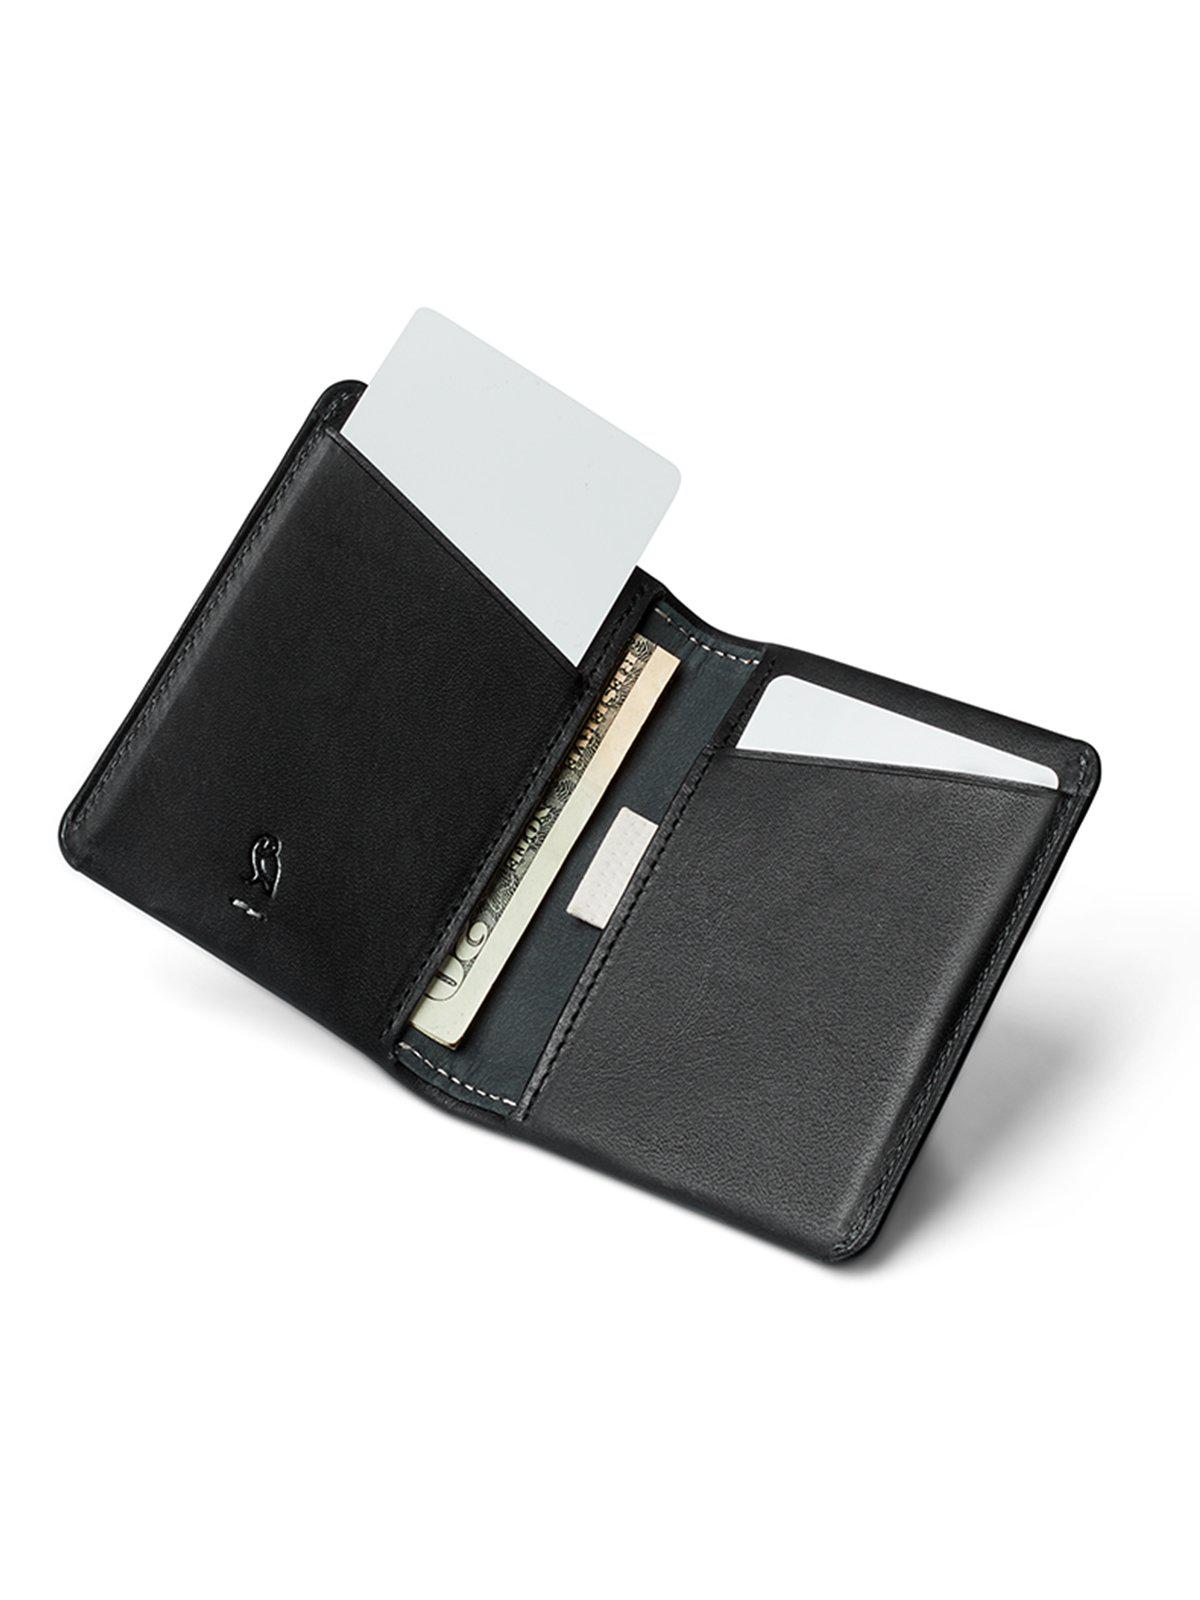 Bellroy Slim Sleeve Wallet Premium Edition Black RFID